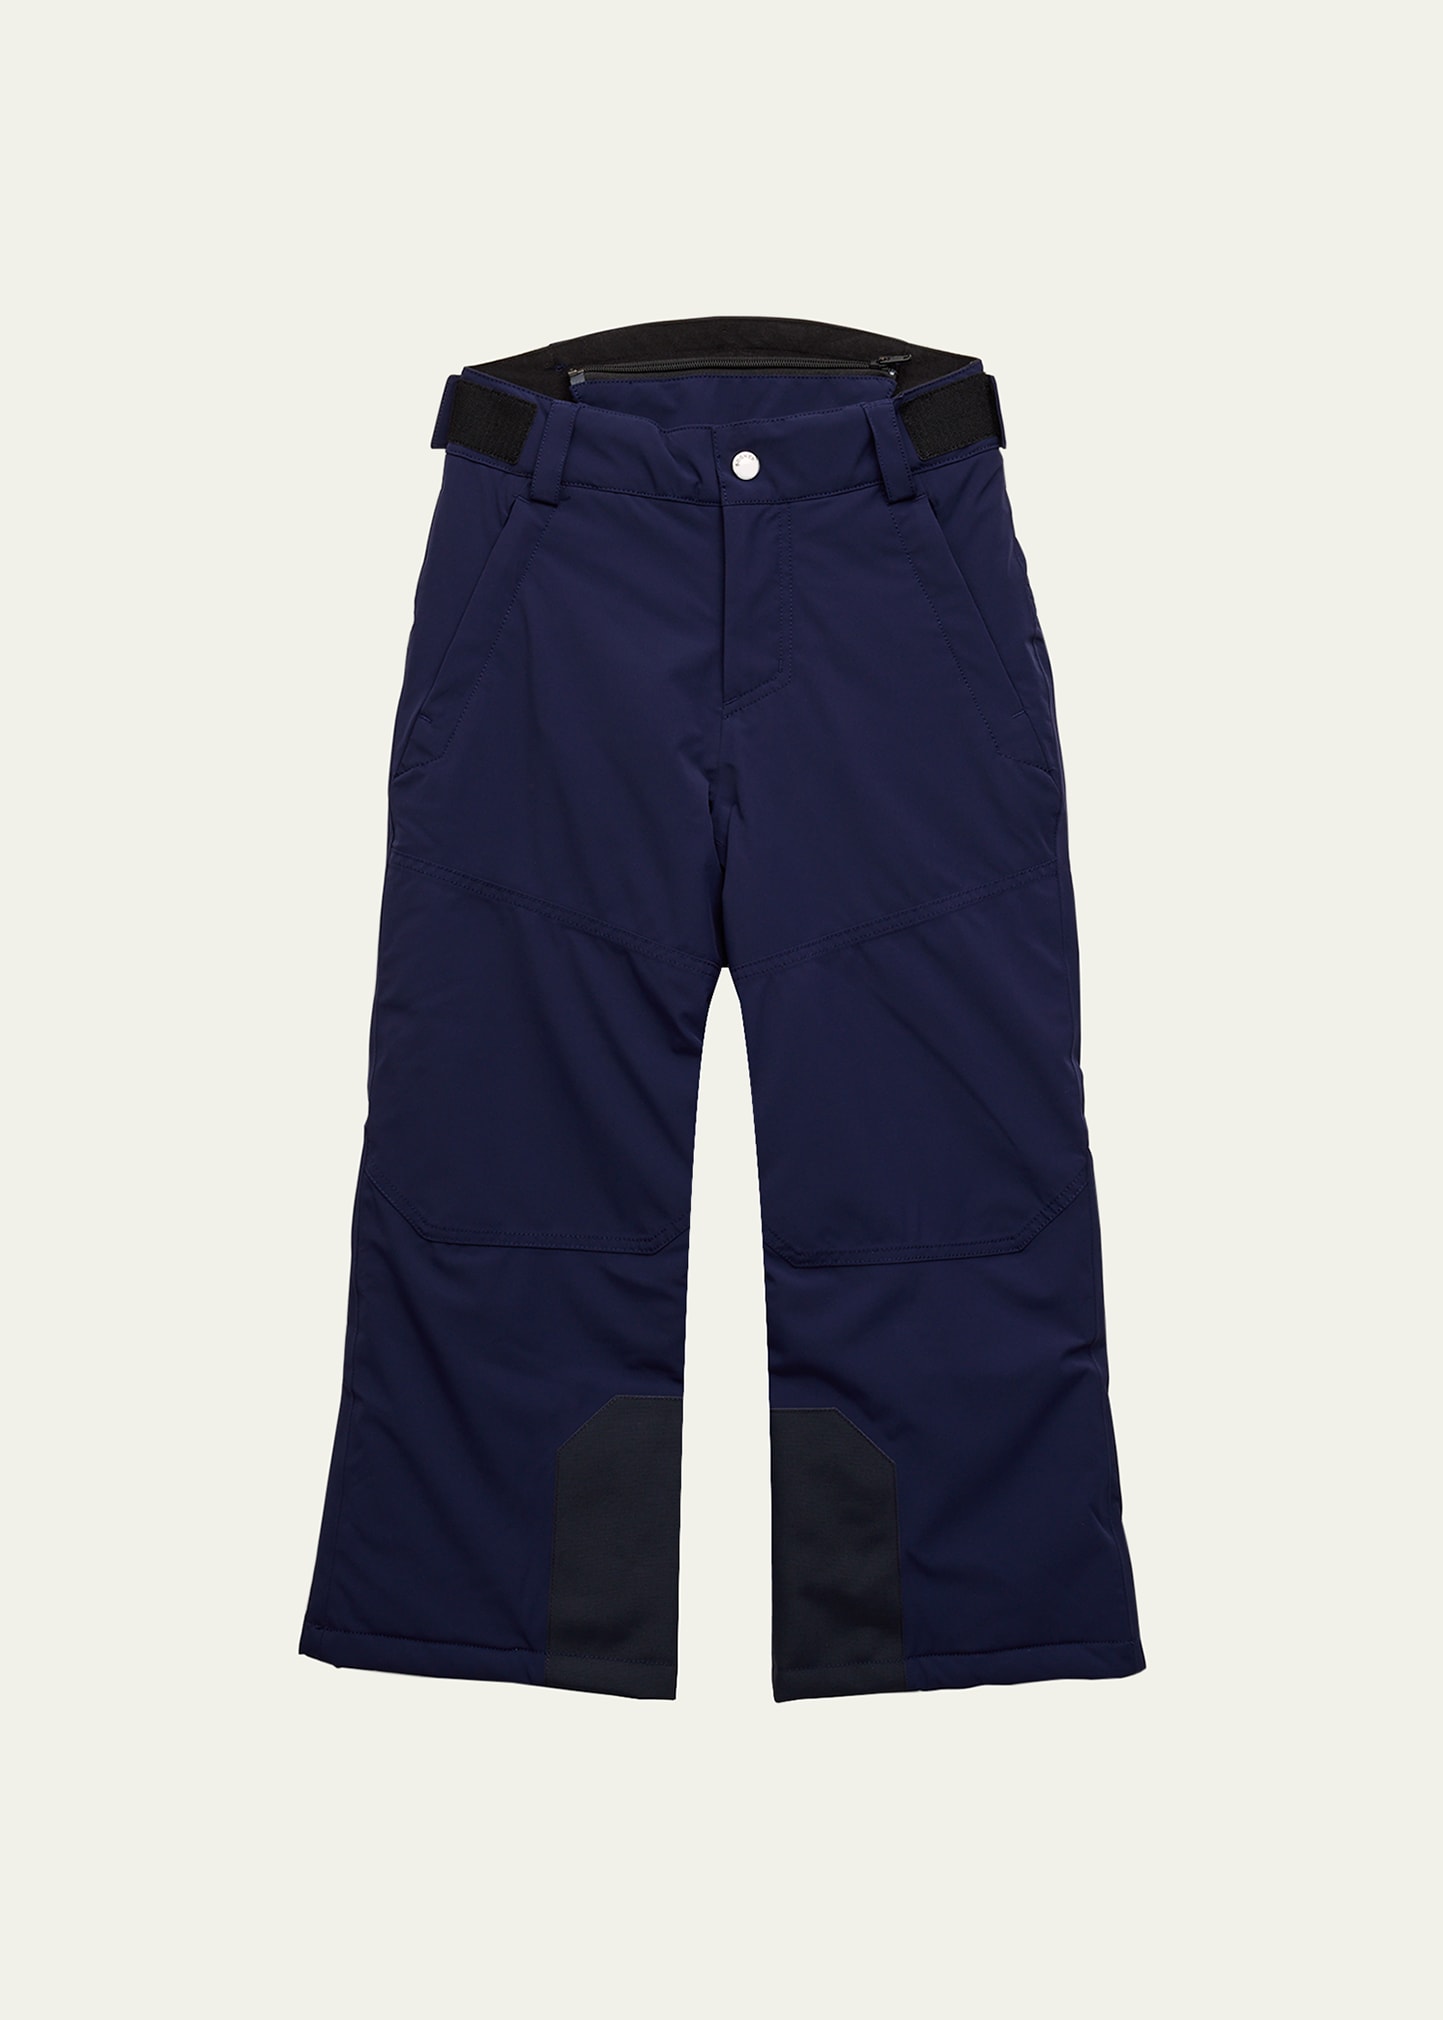 Kid's Yuki T Ski Pants W/ Detachable Suspenders, Size S-XXL